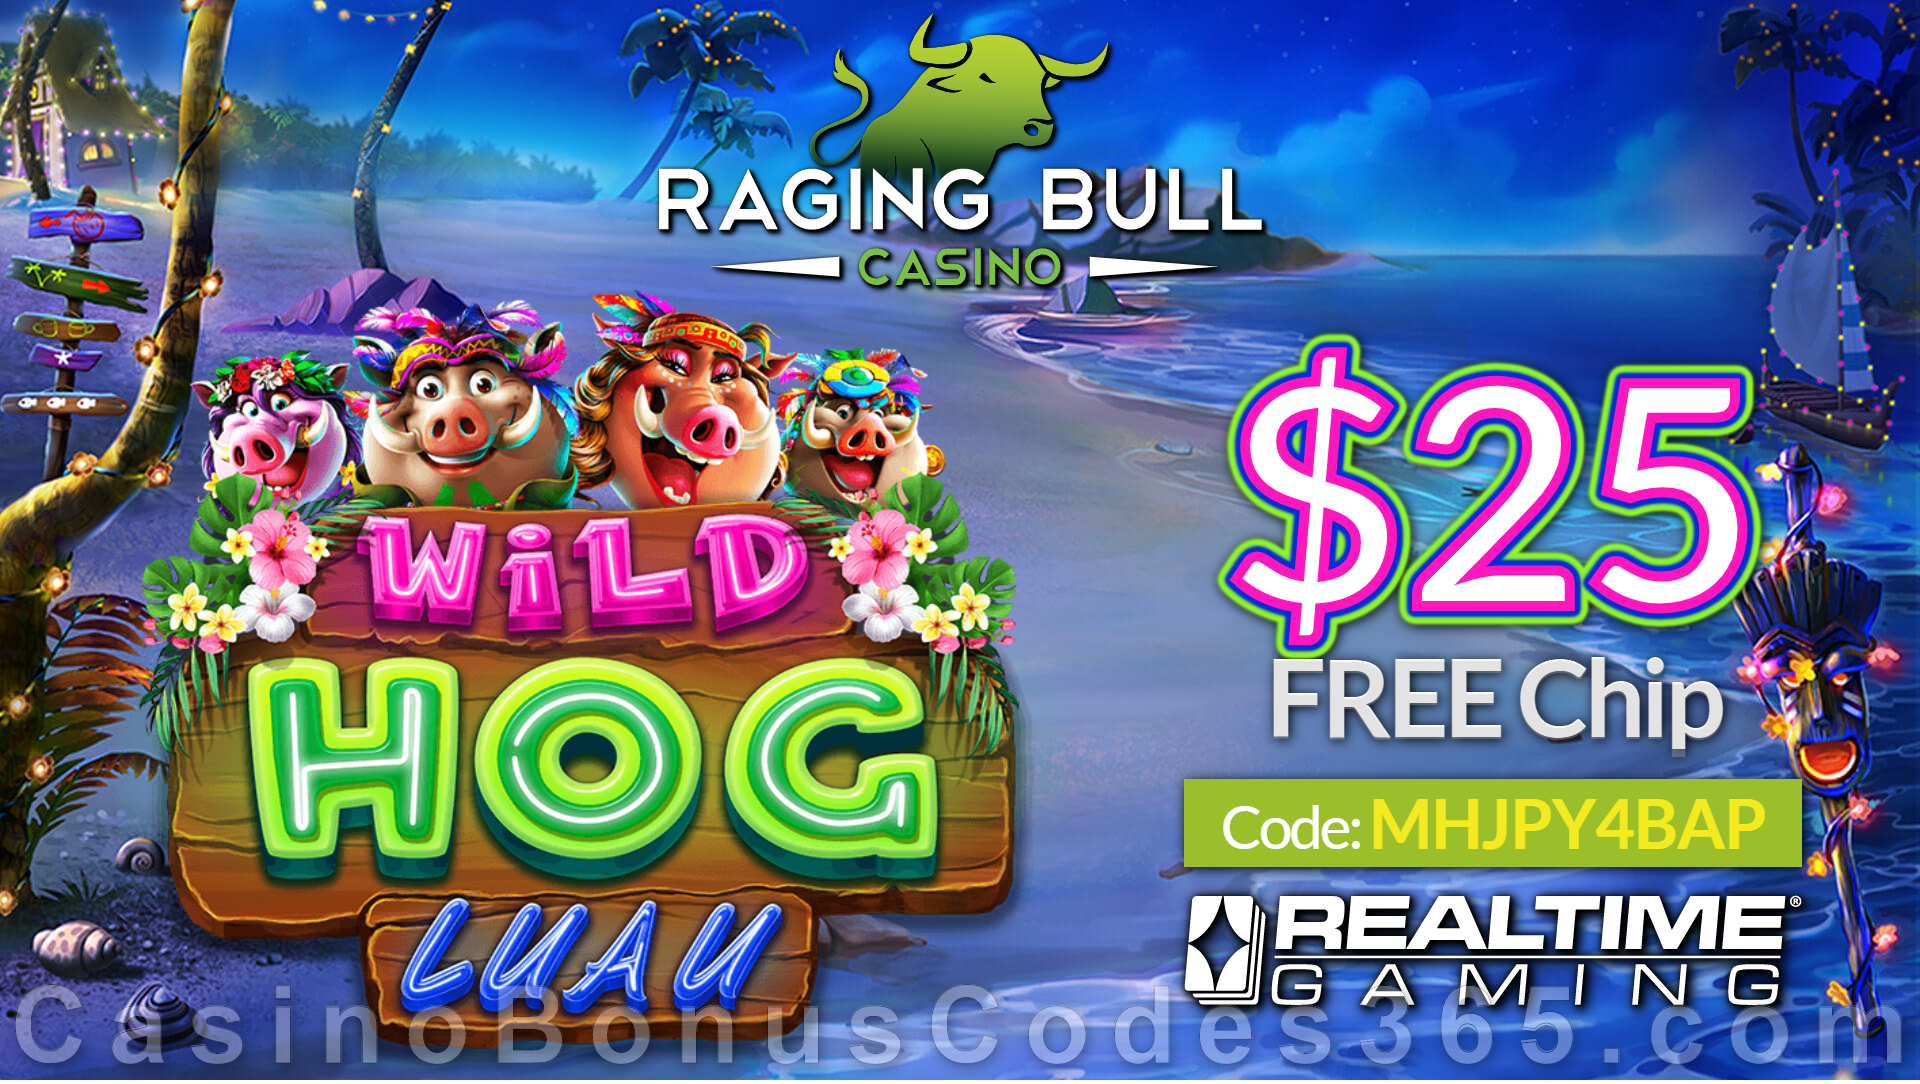 Raging bull casino 200 no deposit bonus codes 2019 roblox